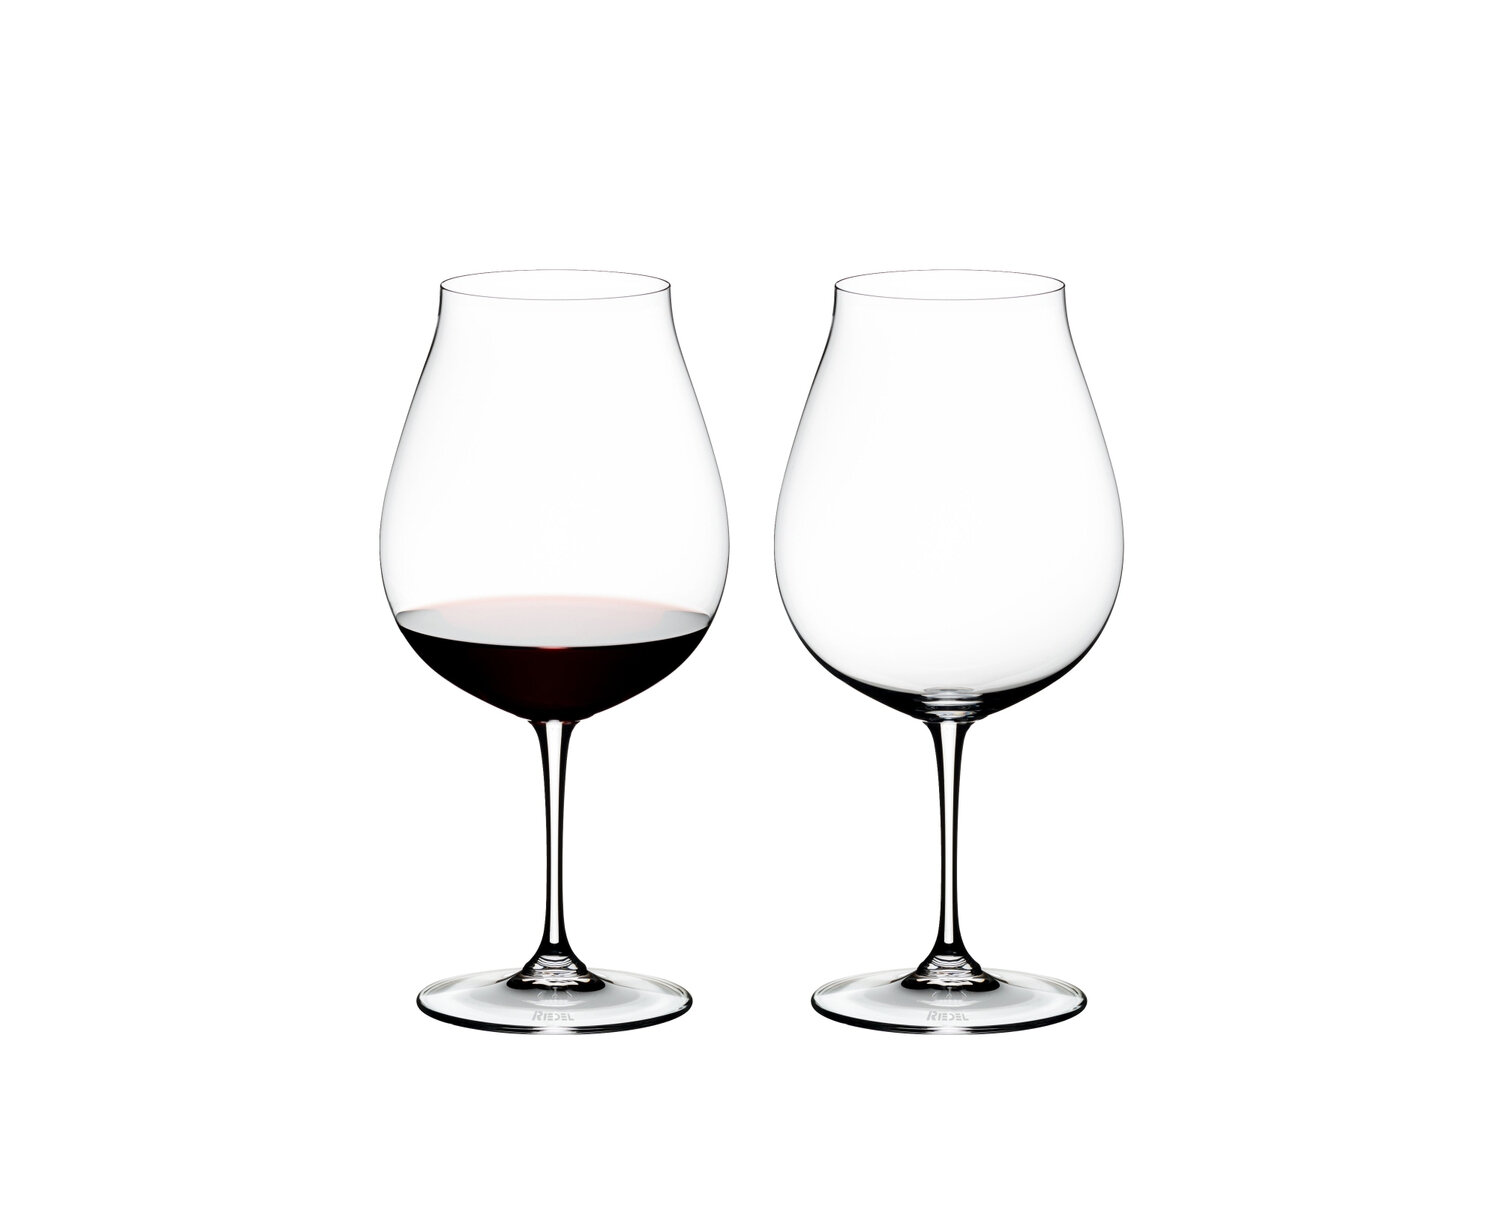 New Set of 2 Riedel Vinum Gold Rimmed Cabernet/Merlot Wine Glasses - No Box